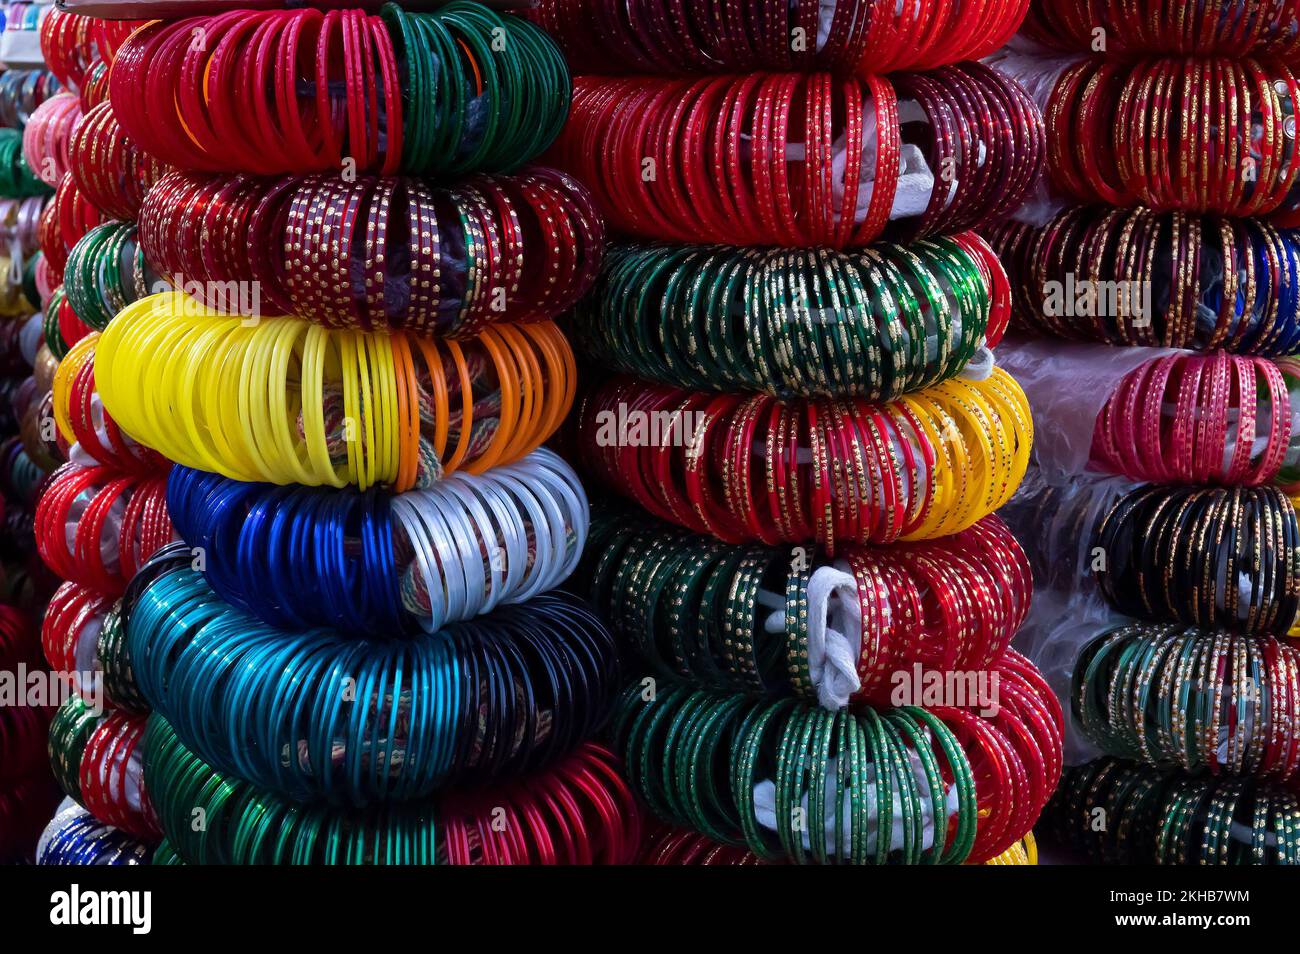 Colorful Rajasthani bangles being sold at famous Sardar Market and Ghanta ghar Clock tower in Jodhpur, Rajasthan, India. Stock Photo